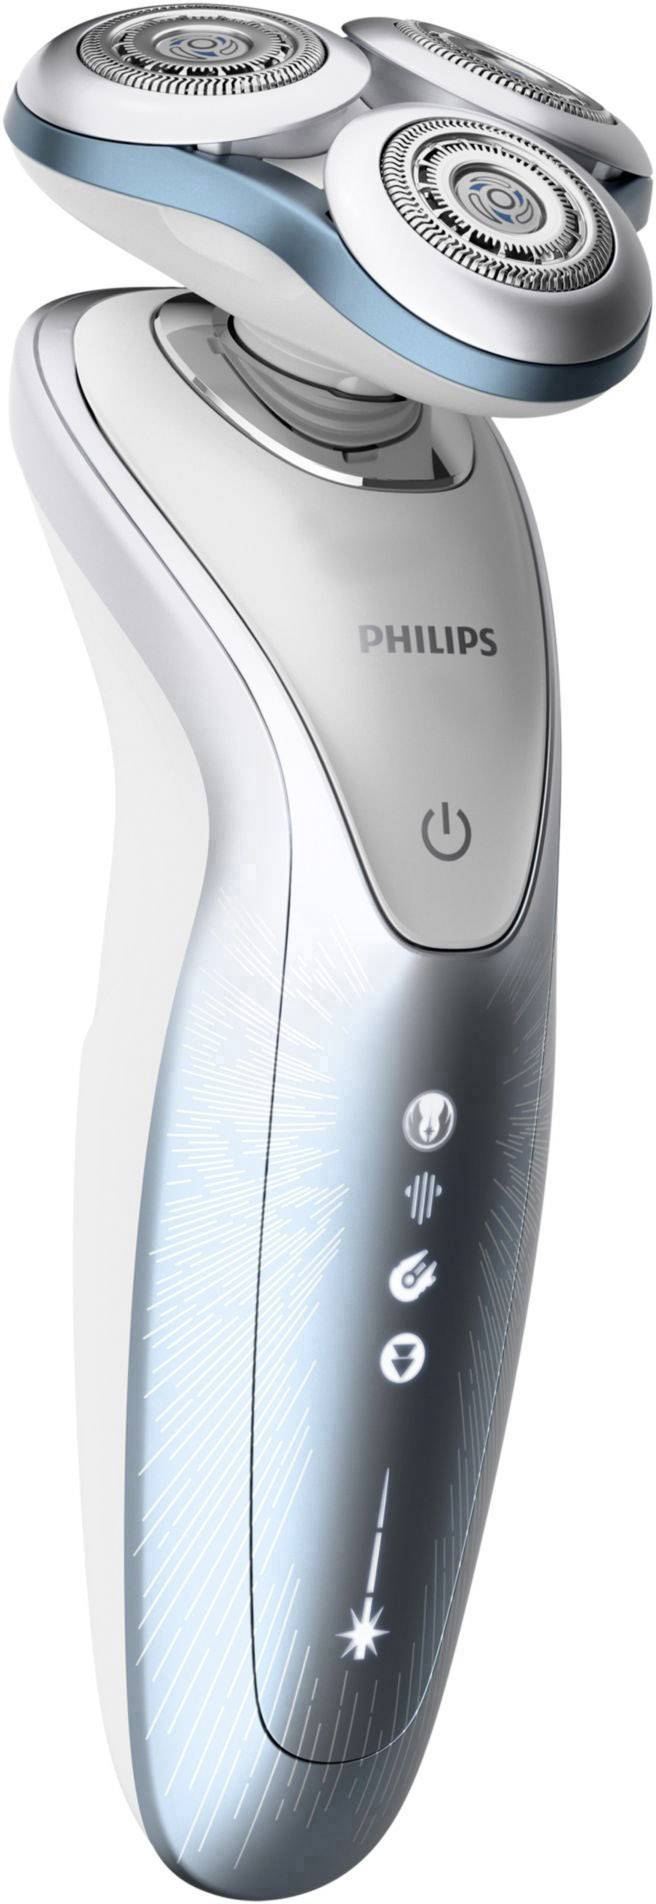 Филипс вращающаяся. Филипс бритва sw7700. Philips 7000 Series бритва. Роторная бритва Филипс. Бритва мужская Филипс роторная.